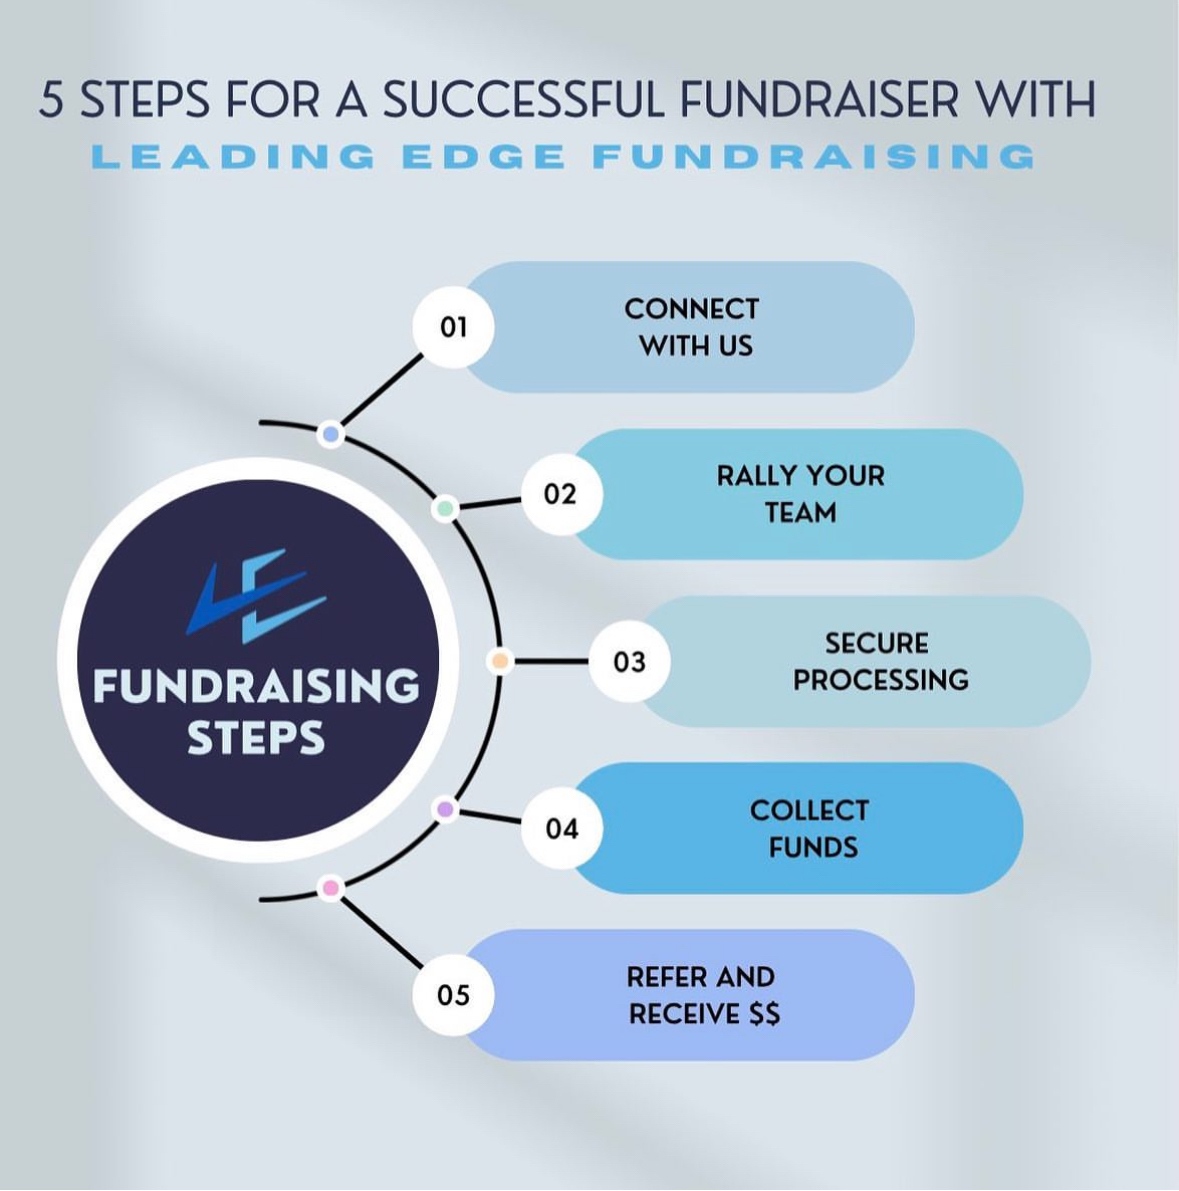 5 easy steps that we walk you through! Making it easy!

#leadingedgefundraising #raisemore #fundraisingmadeeasy